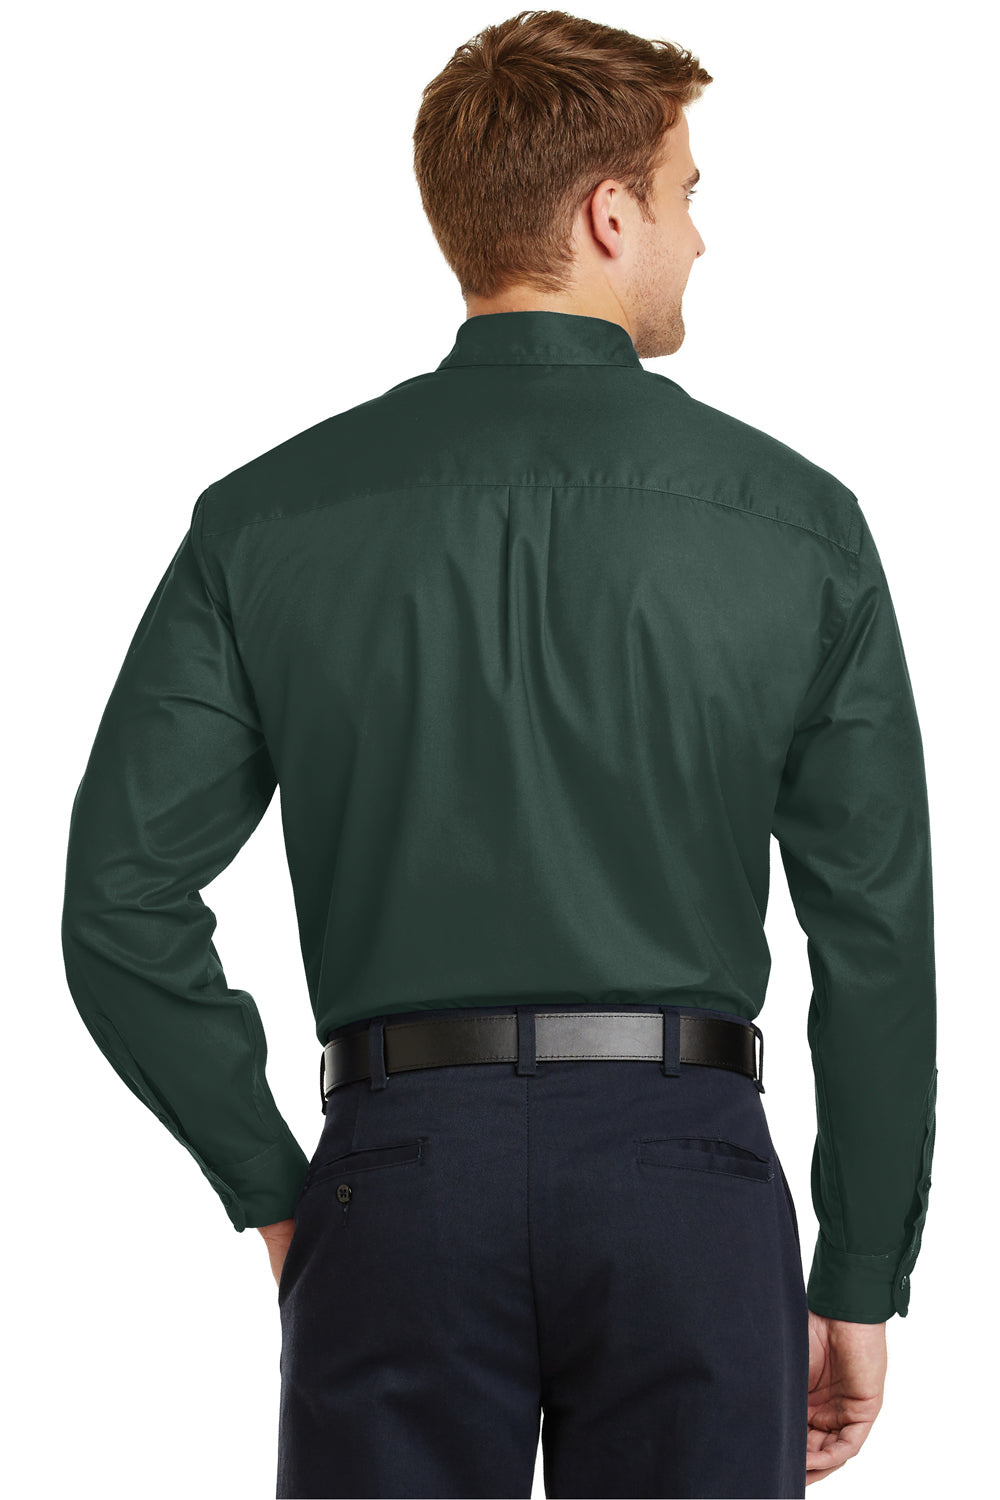 CornerStone SP17 Mens SuperPro Stain Resistant Long Sleeve Button Down Shirt w/ Pocket Dark Green Back